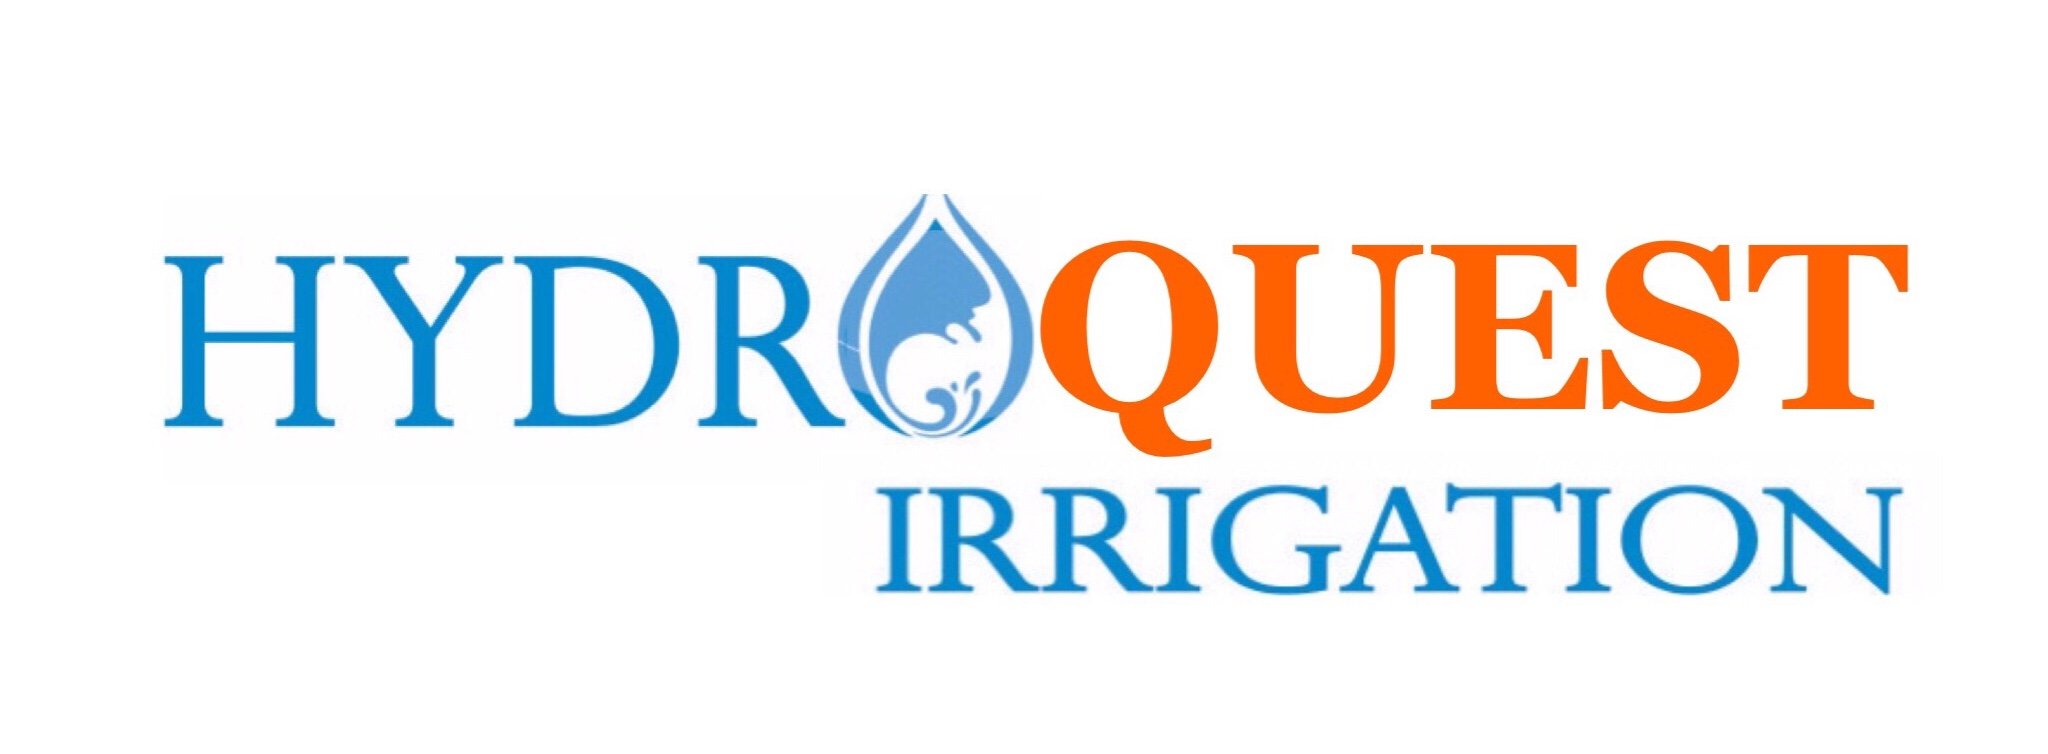 Hydroquest Irrigation Logo